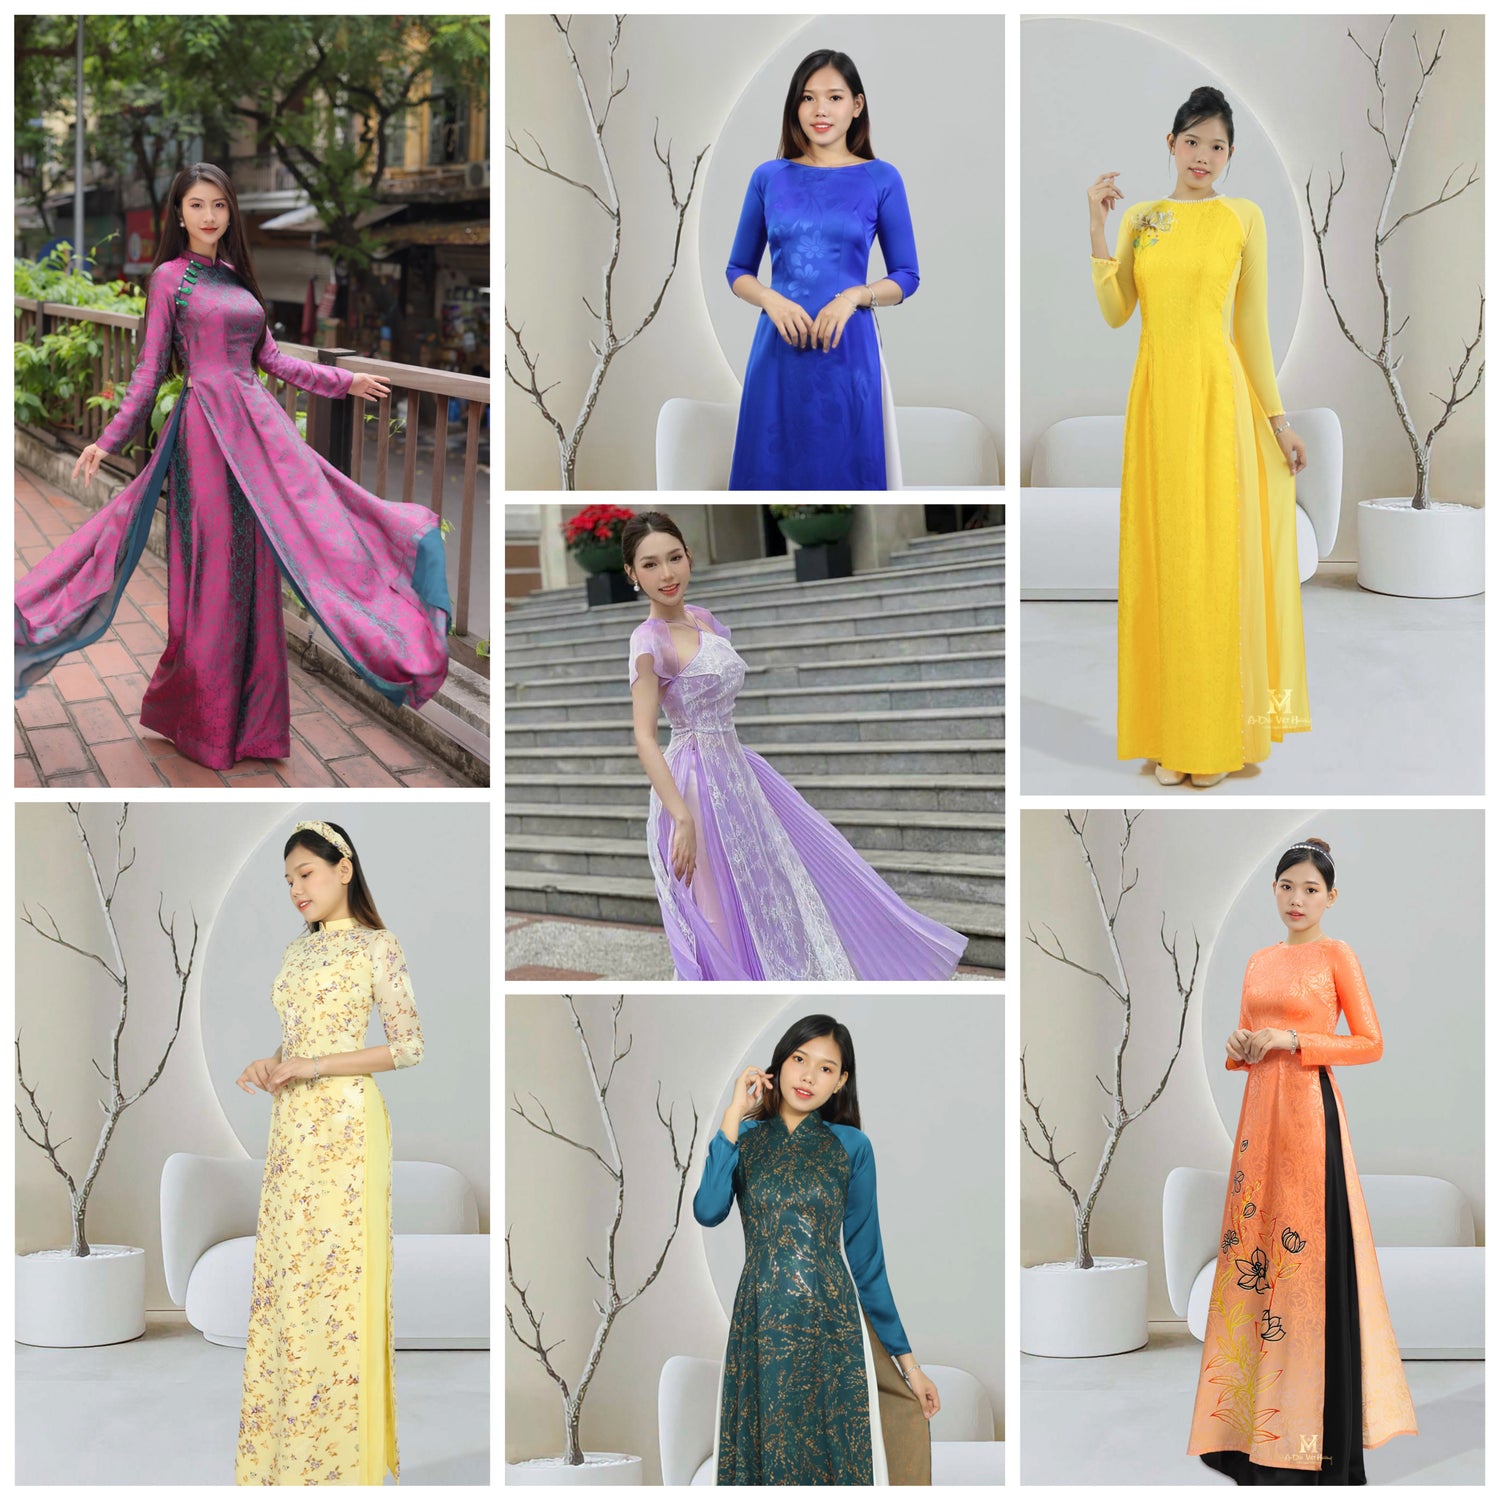 Áo Dài (Vietnamese Traditional Dress)